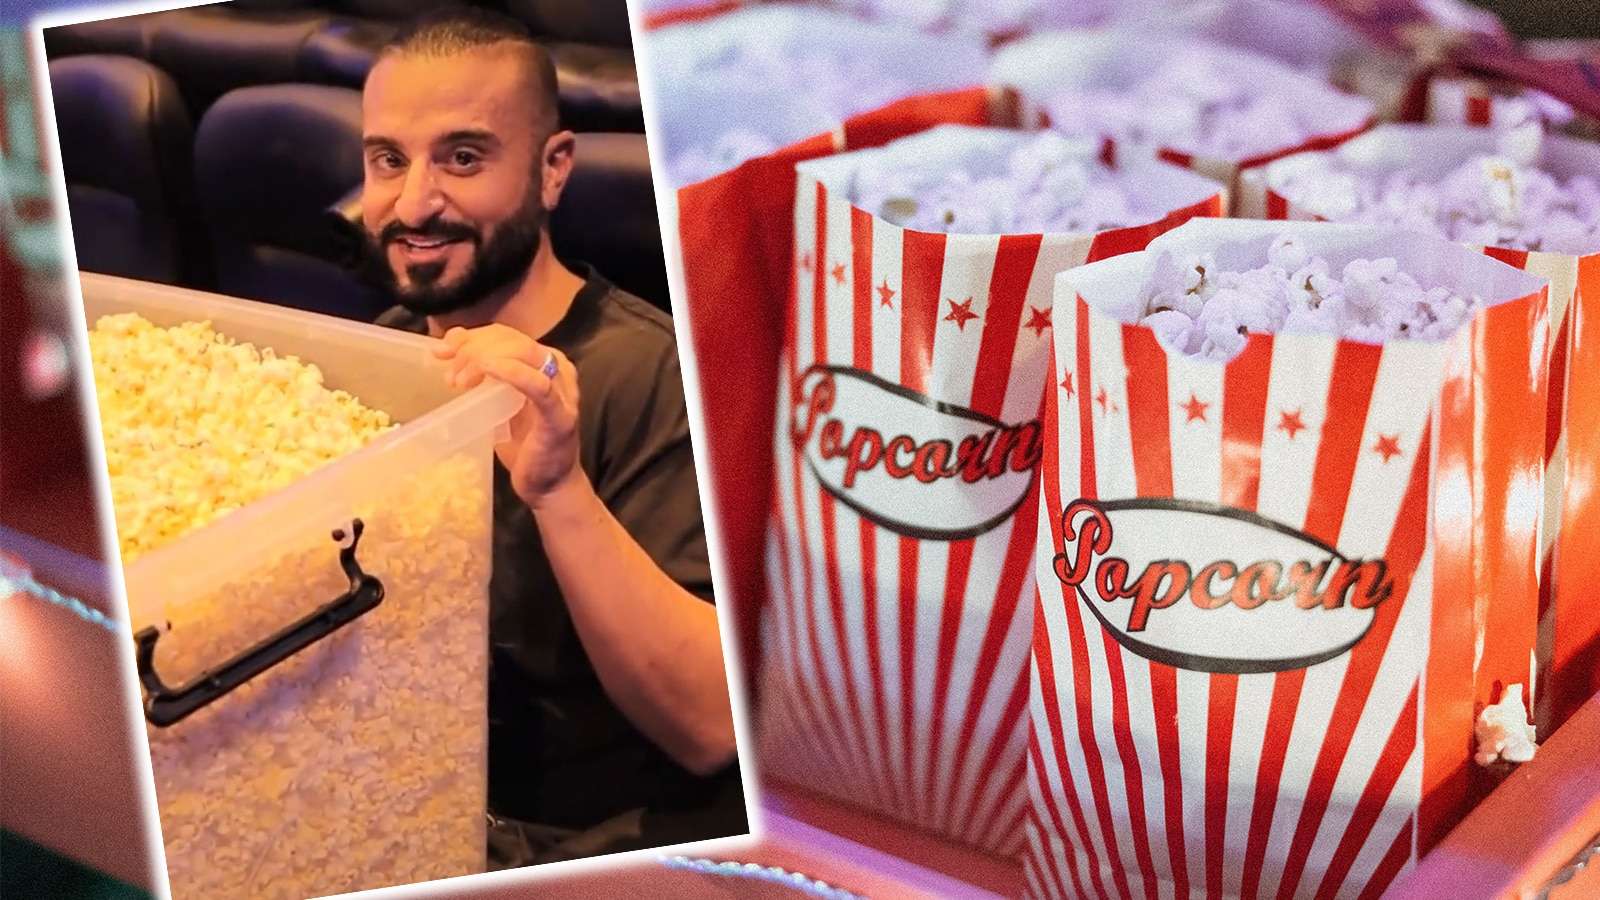 TikToker goes viral for genius movie theater poprcorn hack